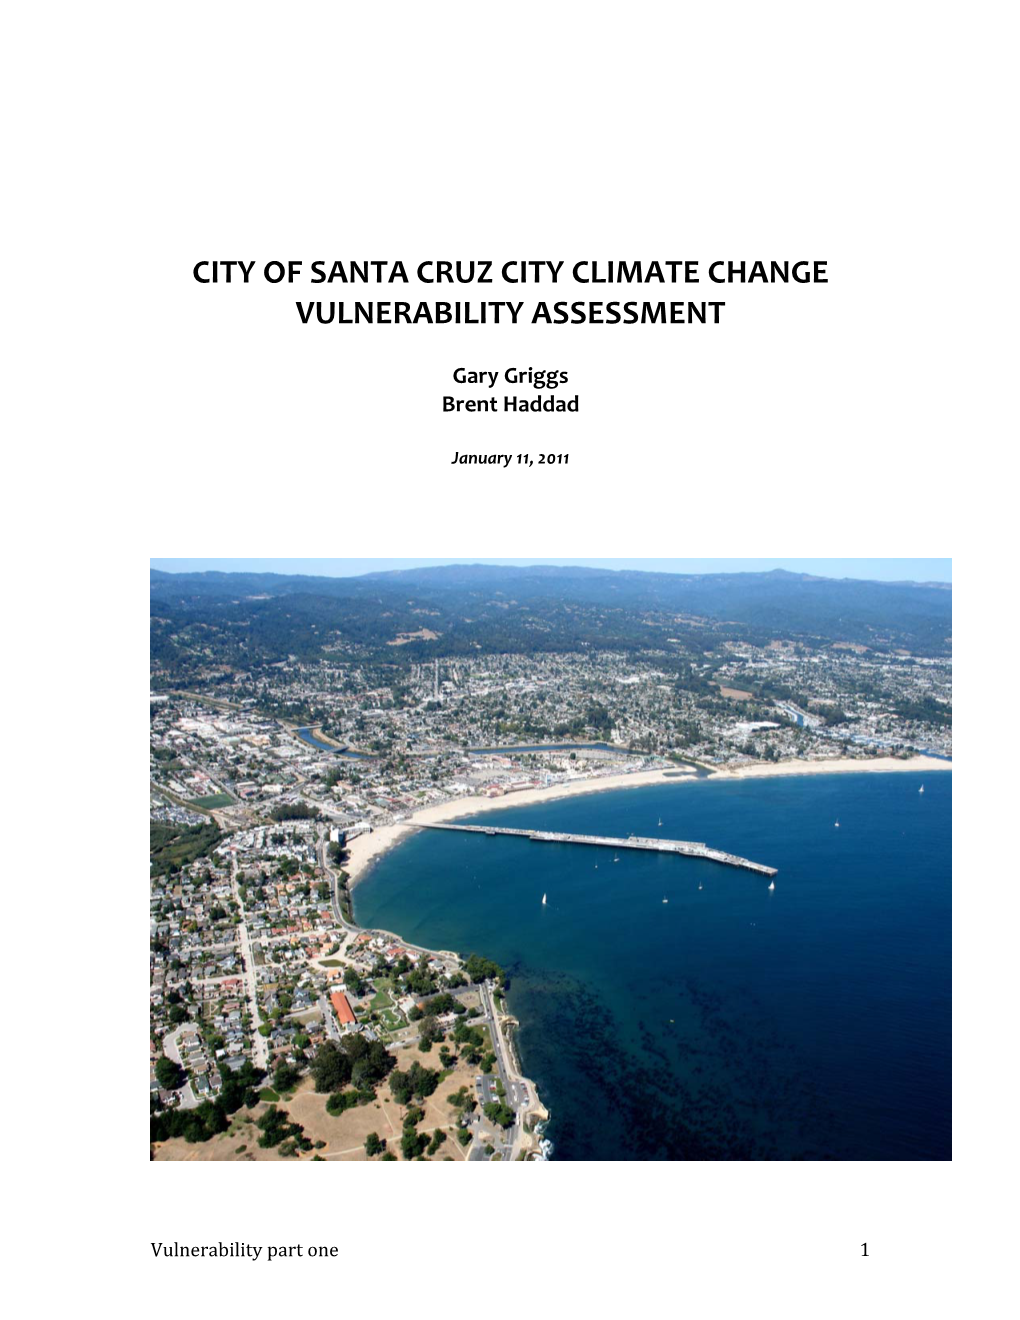 Climate Vulnerability Assessment